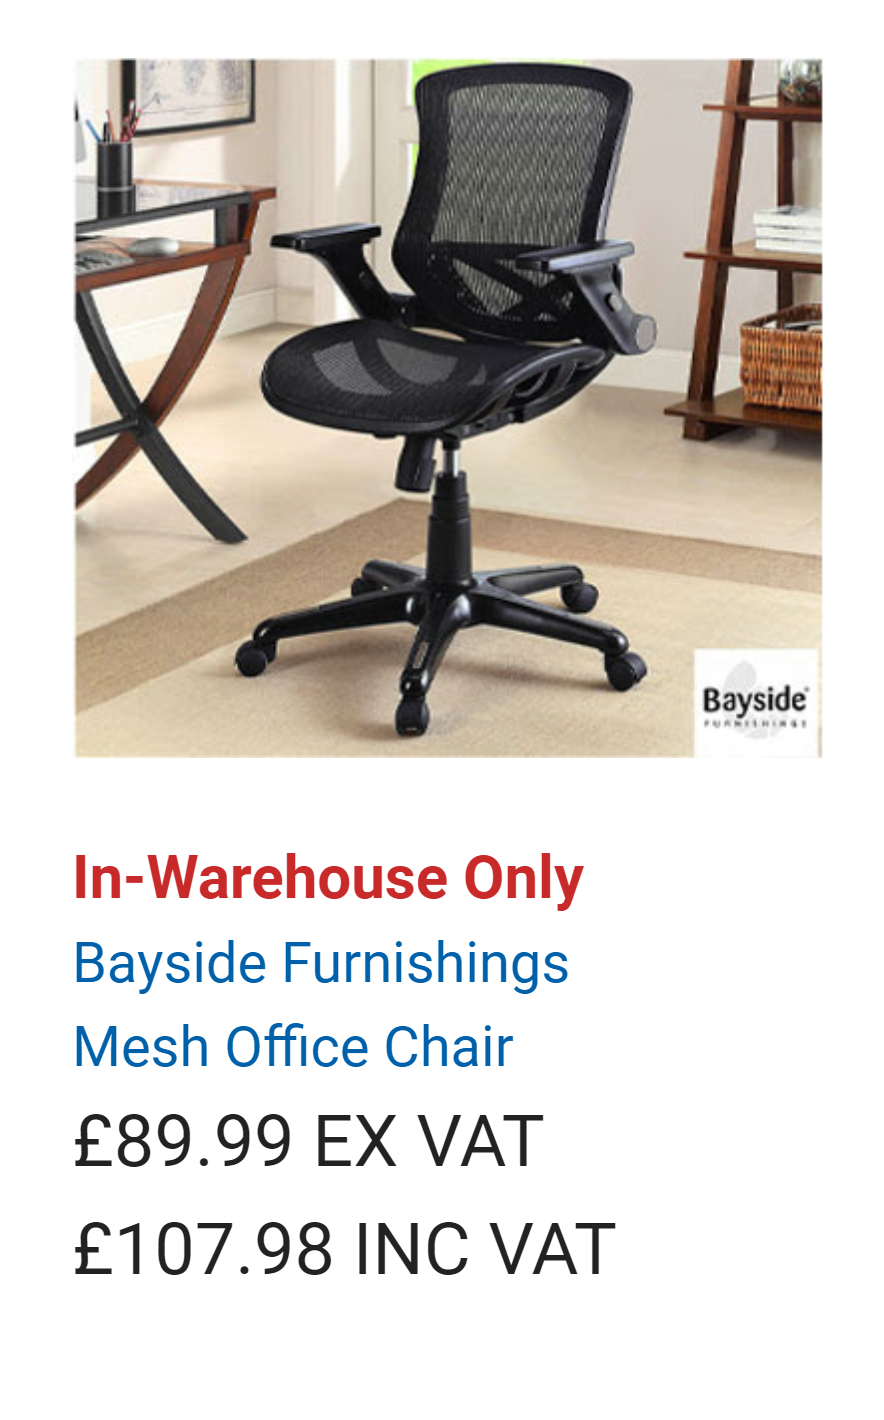 Whalen Metrex IV Bayside Furnishings Mesh Office Chair - £107.98 (in